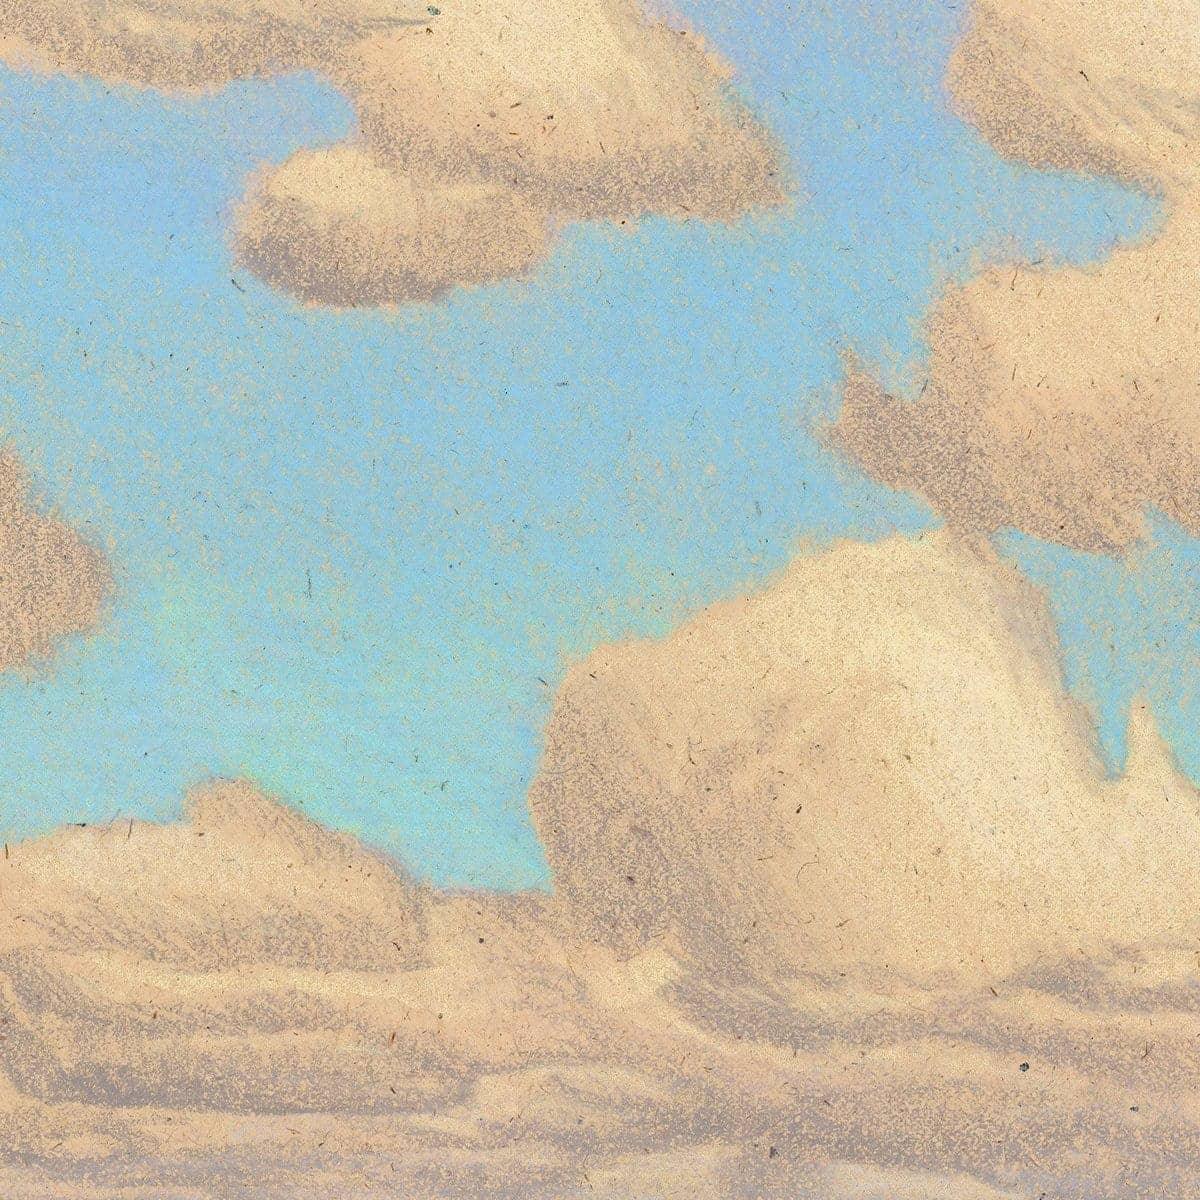 Drag Lake Cloud Study - Canvas Print | Artwork by Glen Loates